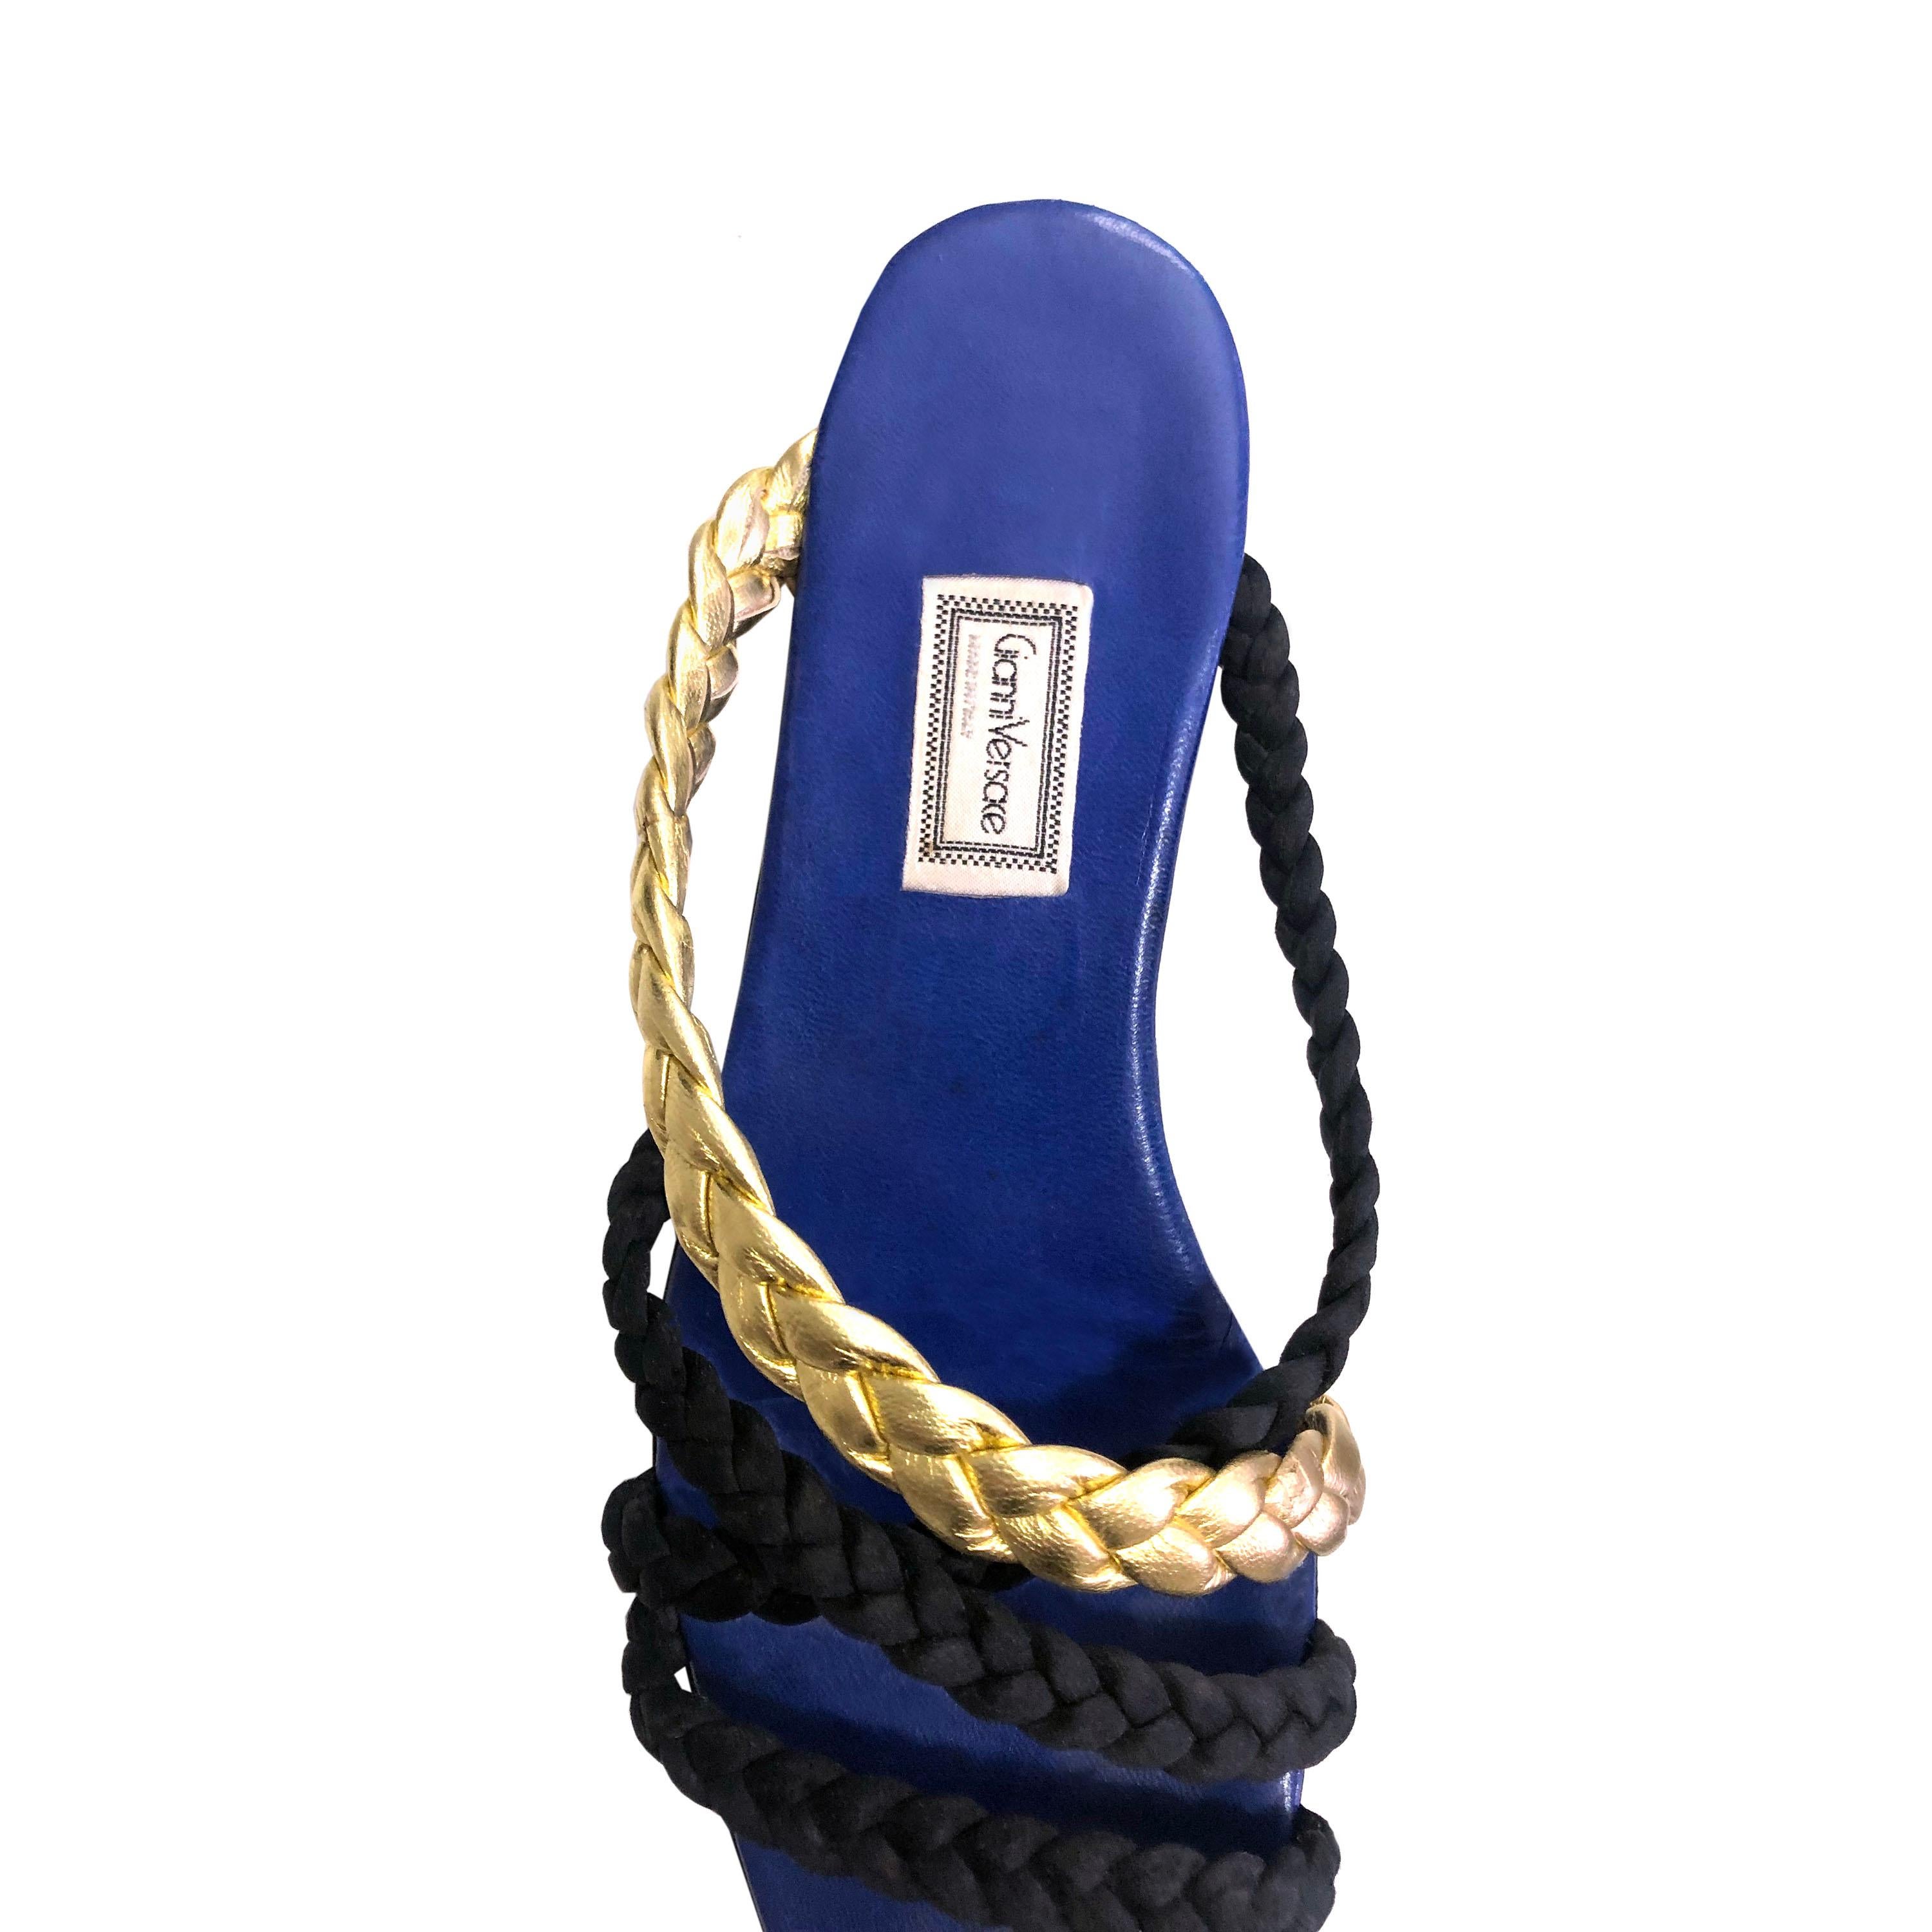 Gianni Versace - 1980s Vintage - Sandals - Gold Leather Plaited Straps - EU 37.5 For Sale 1